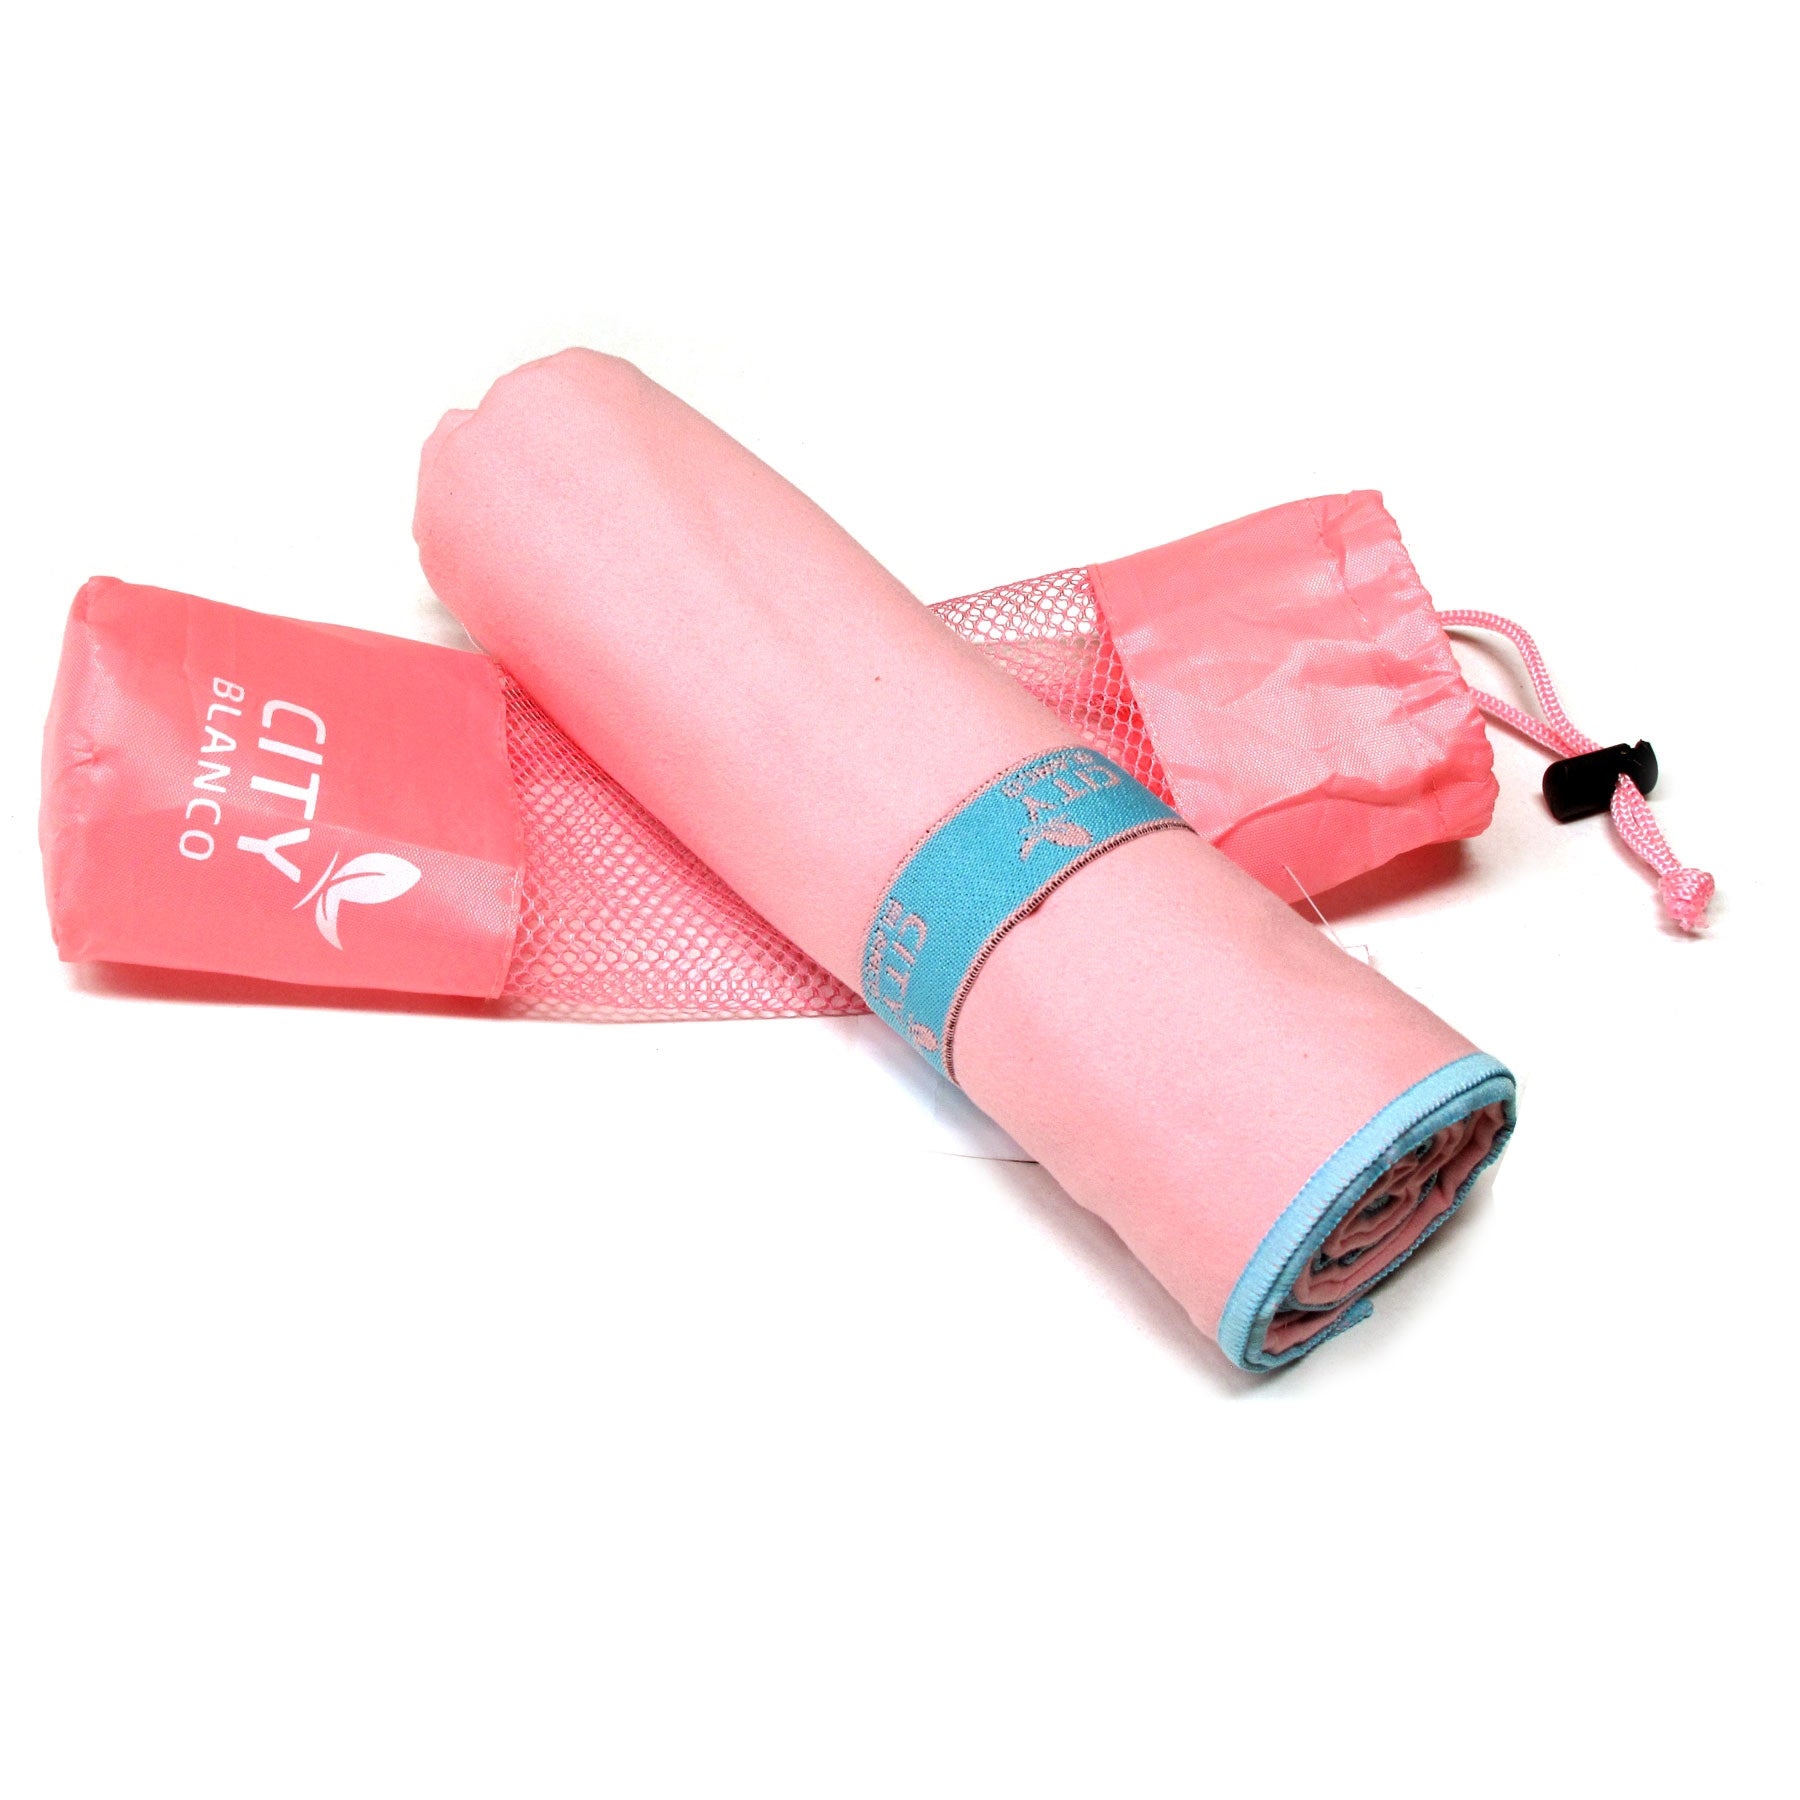 Super Absorbent Sports Towel Pink